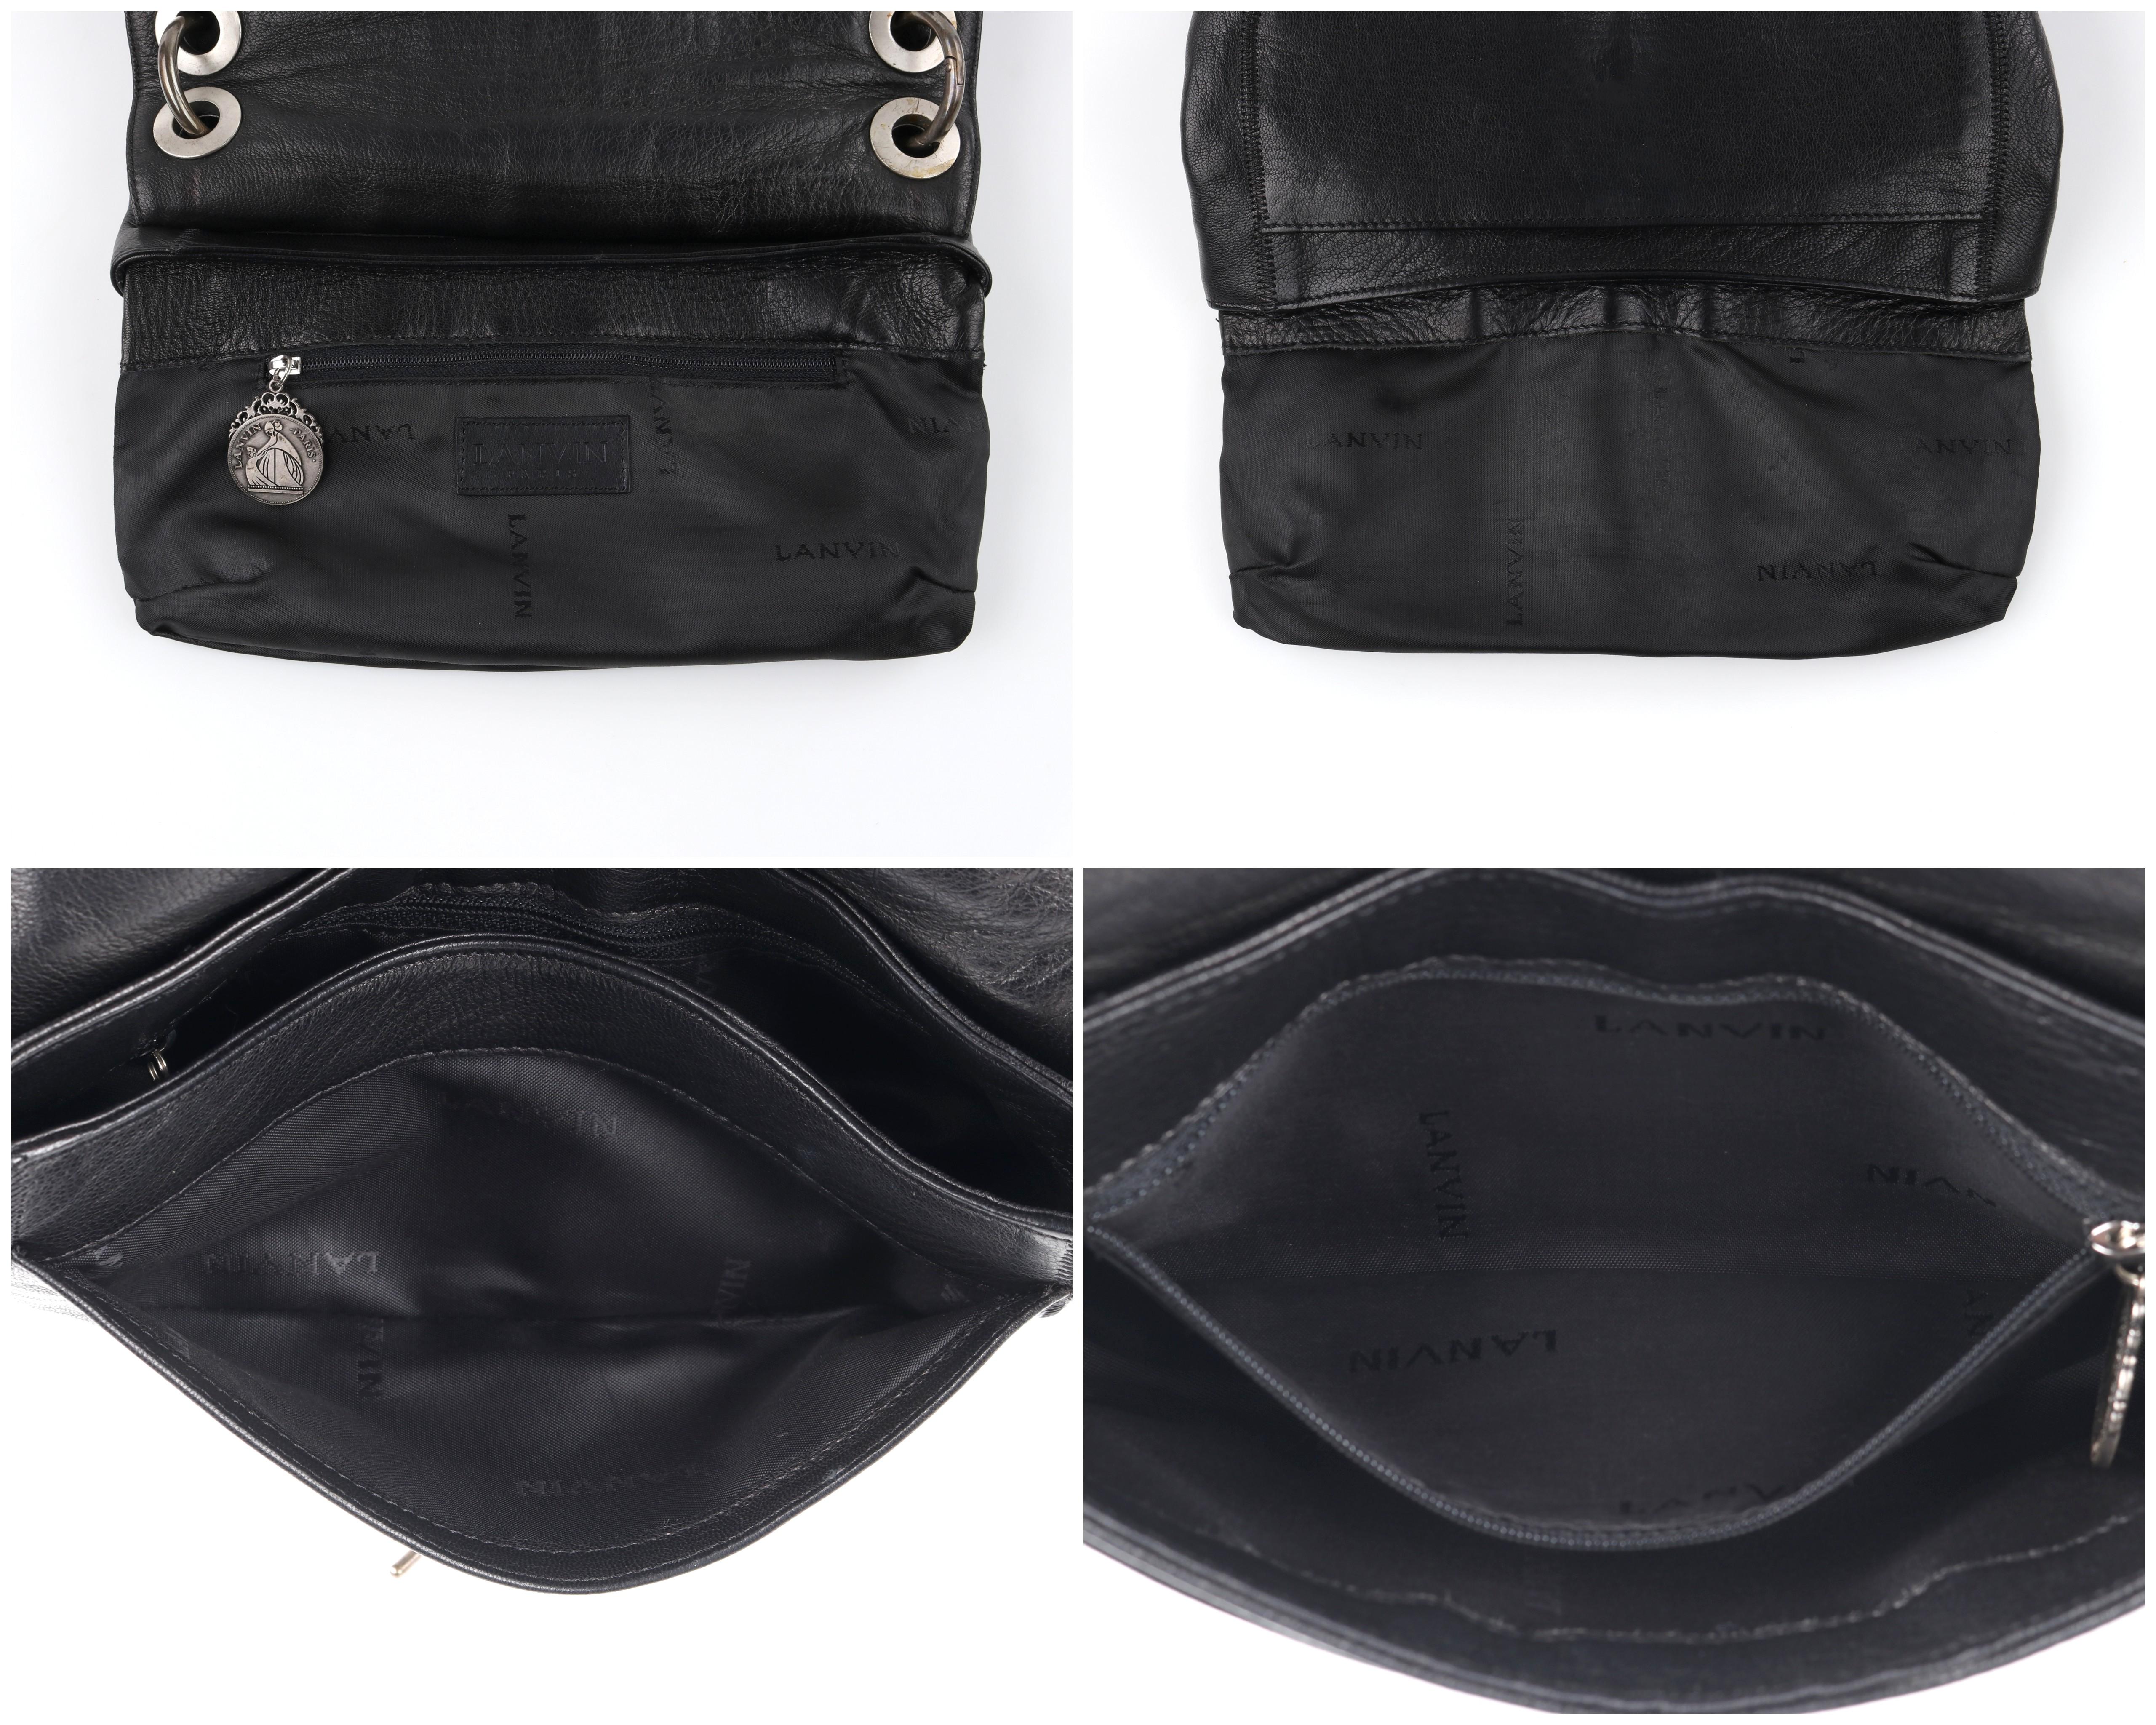 LANVIN “Jeanne” Black Leather Braided Pom Pom Tassel Strap Flap Clutch ...